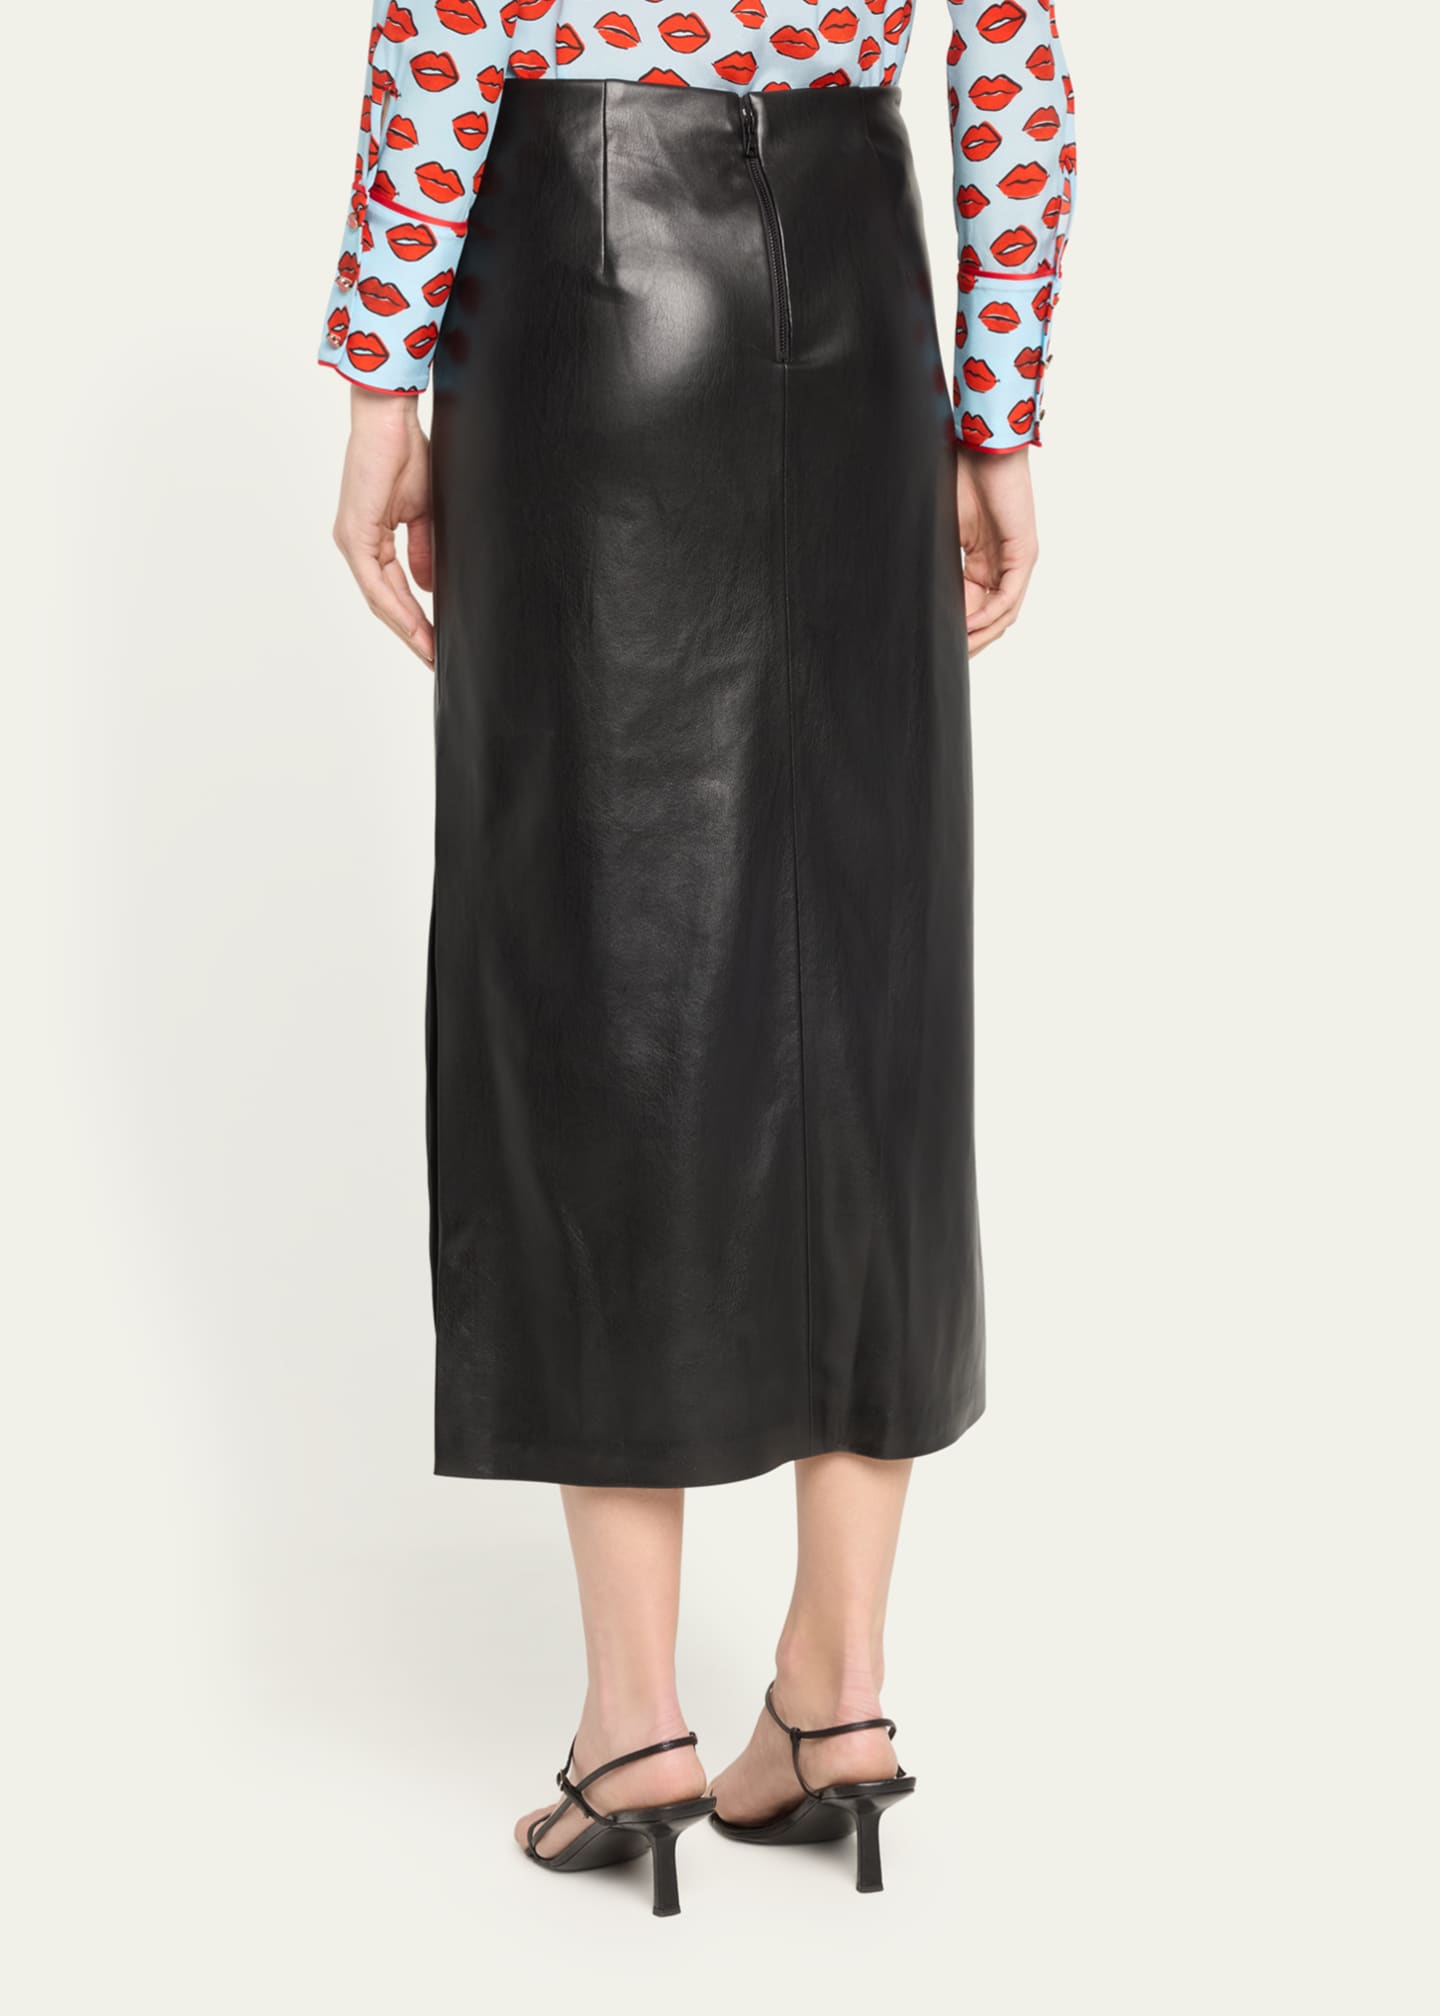 Alice + Olivia Maeve Vegan Leather Slip Skirt - Bergdorf Goodman